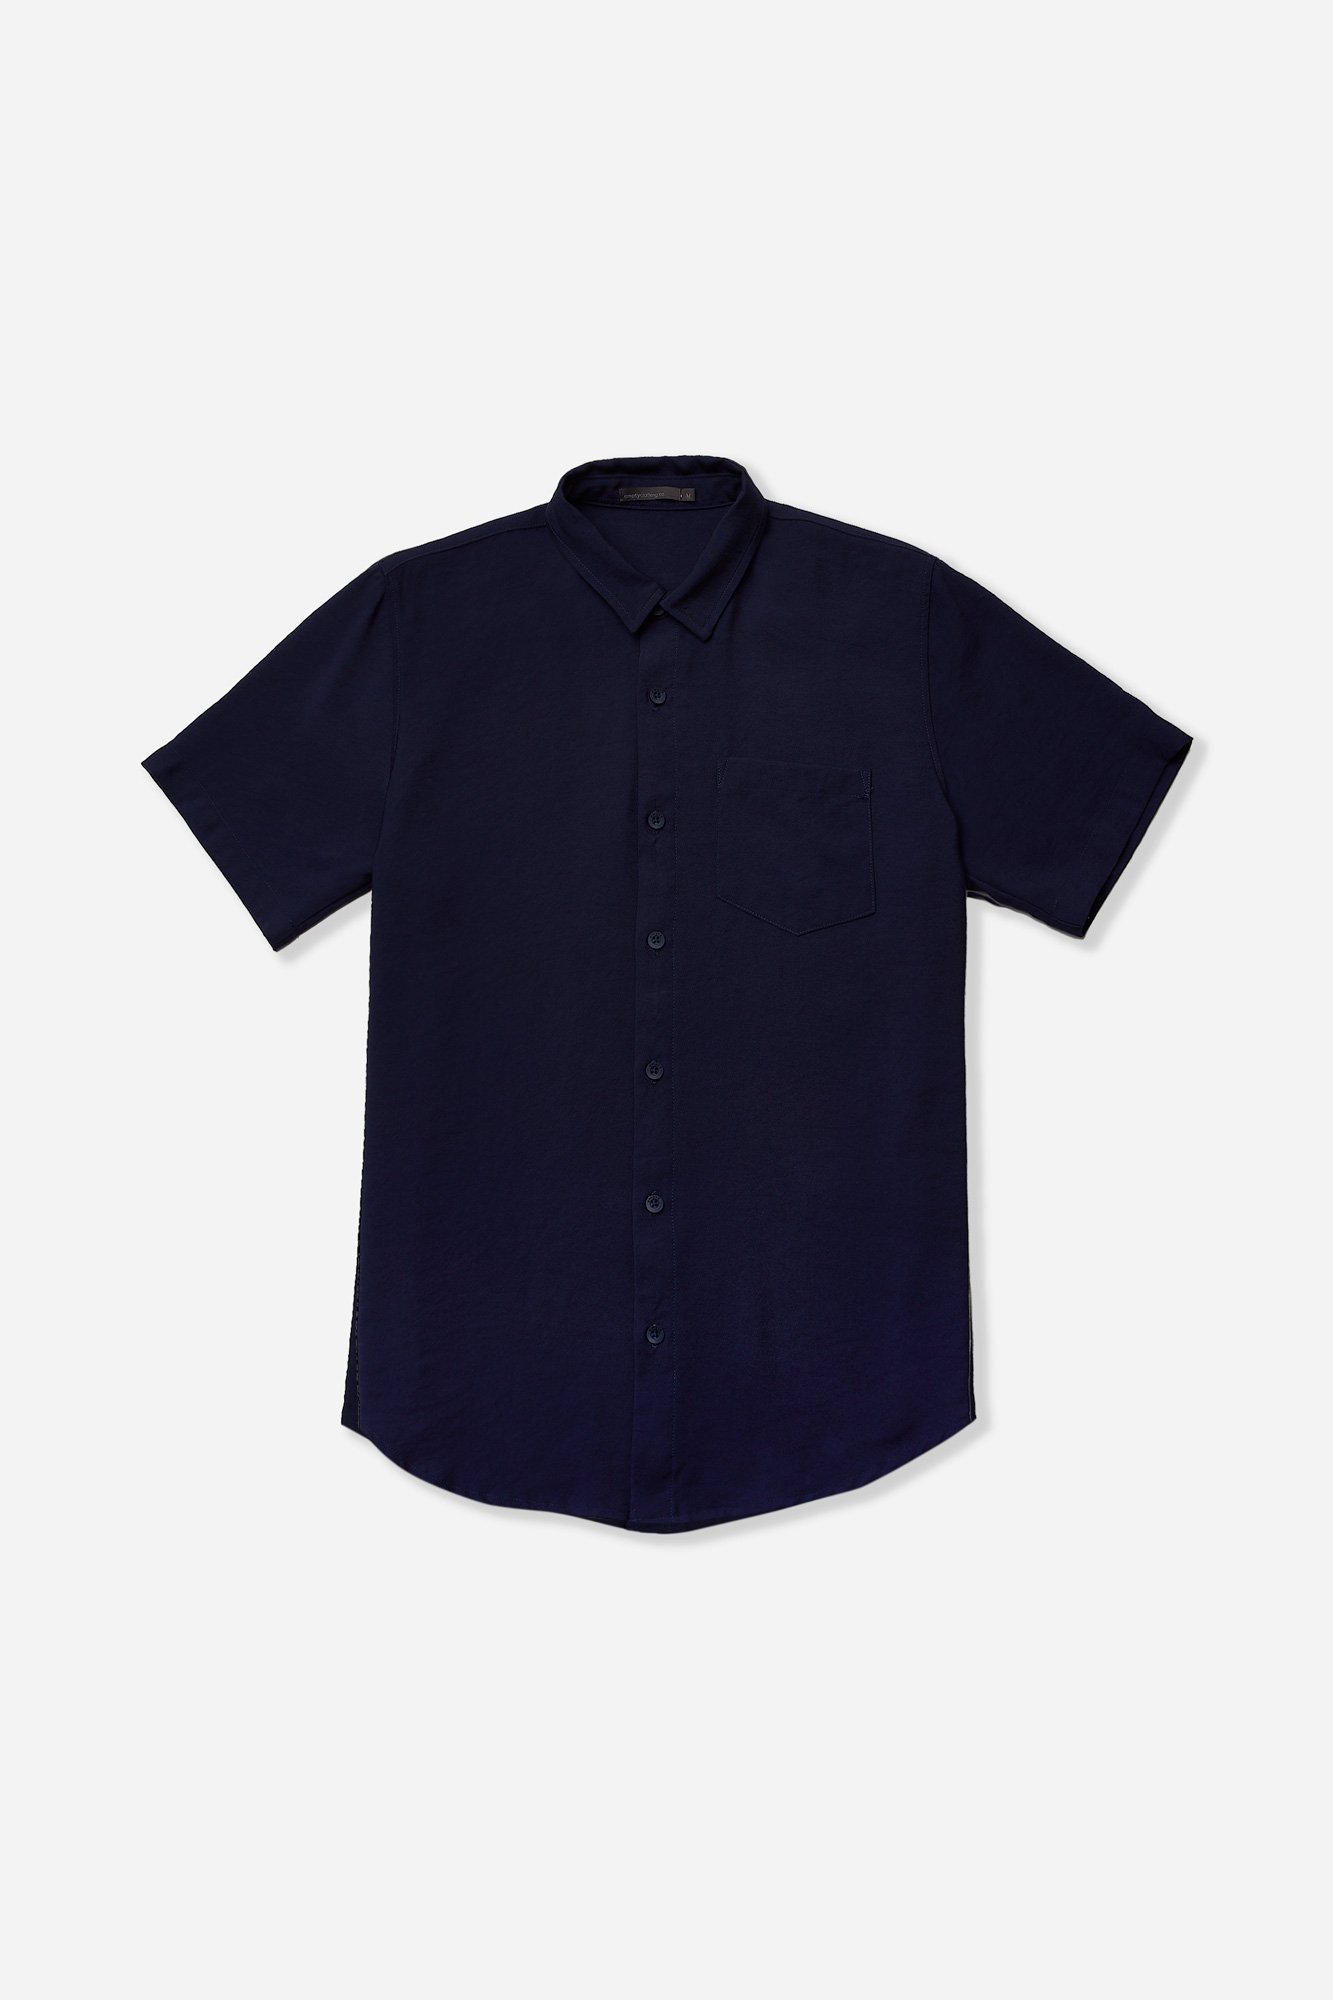 01 camisa viscose basico azul marinho